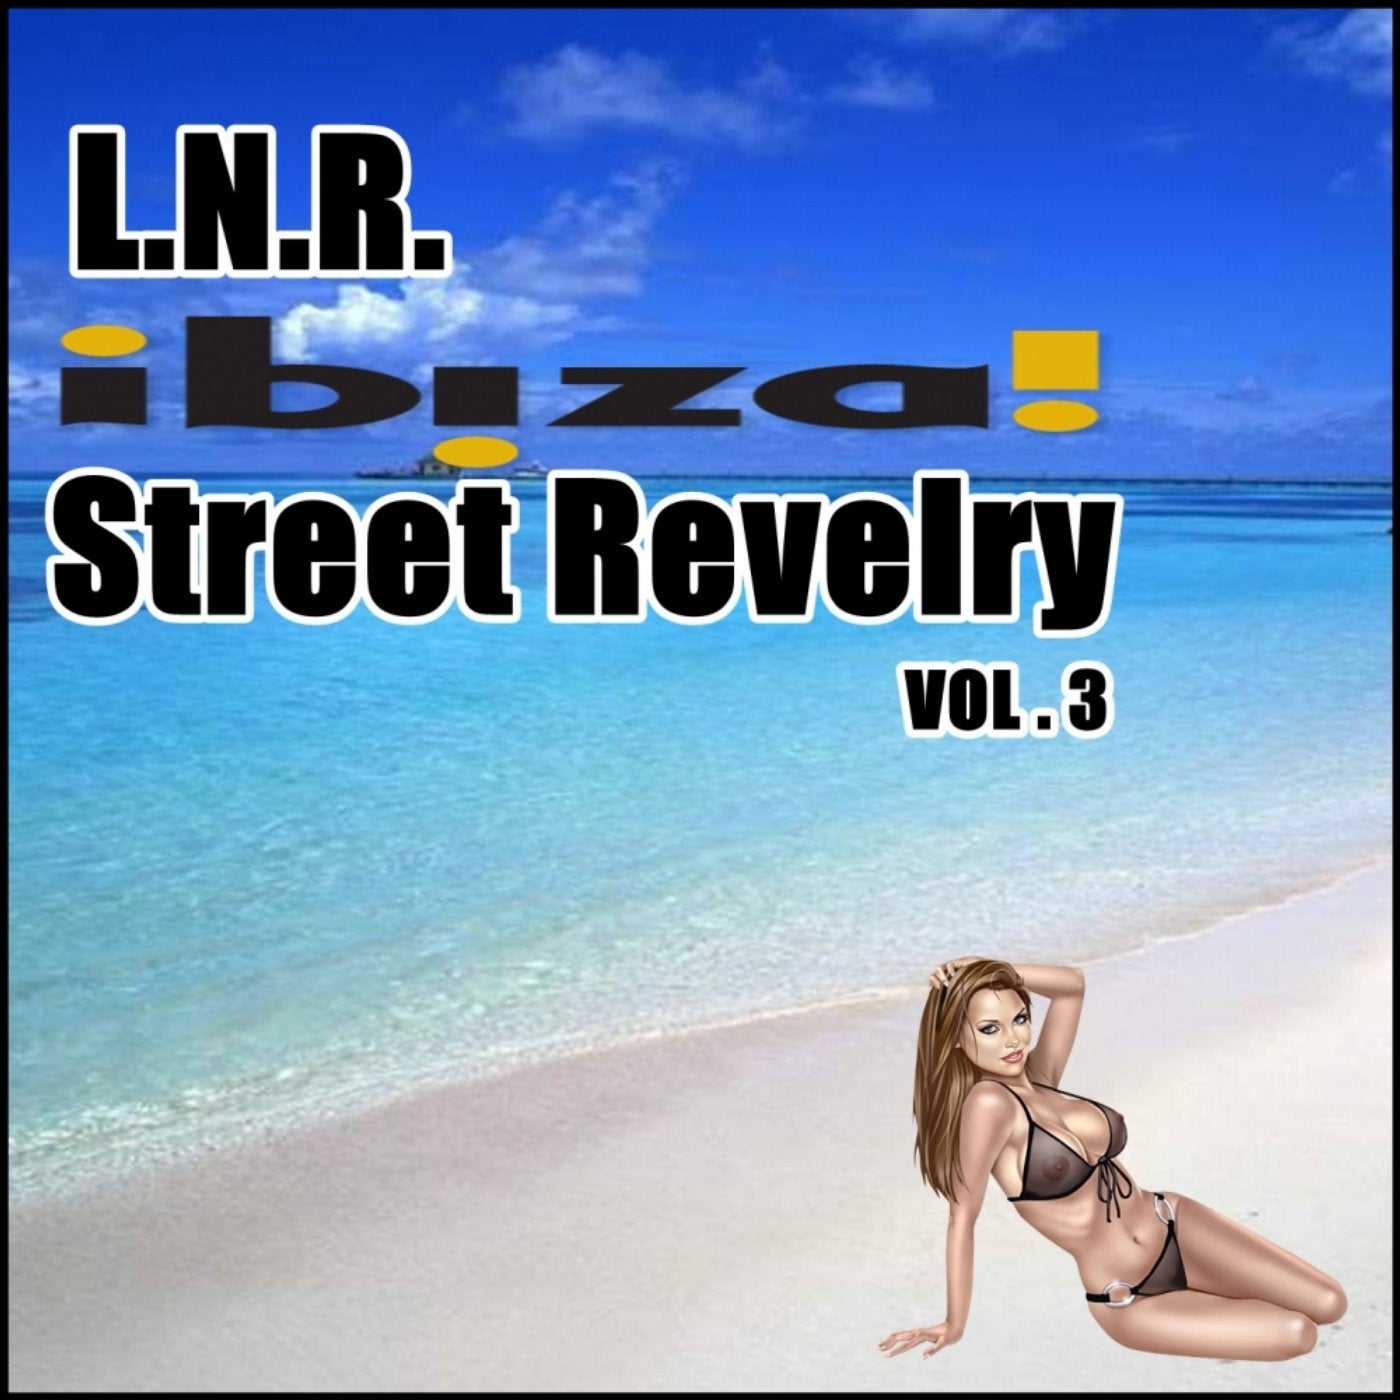 L.N.R. Ibiza Street Revelry, Vol. 3